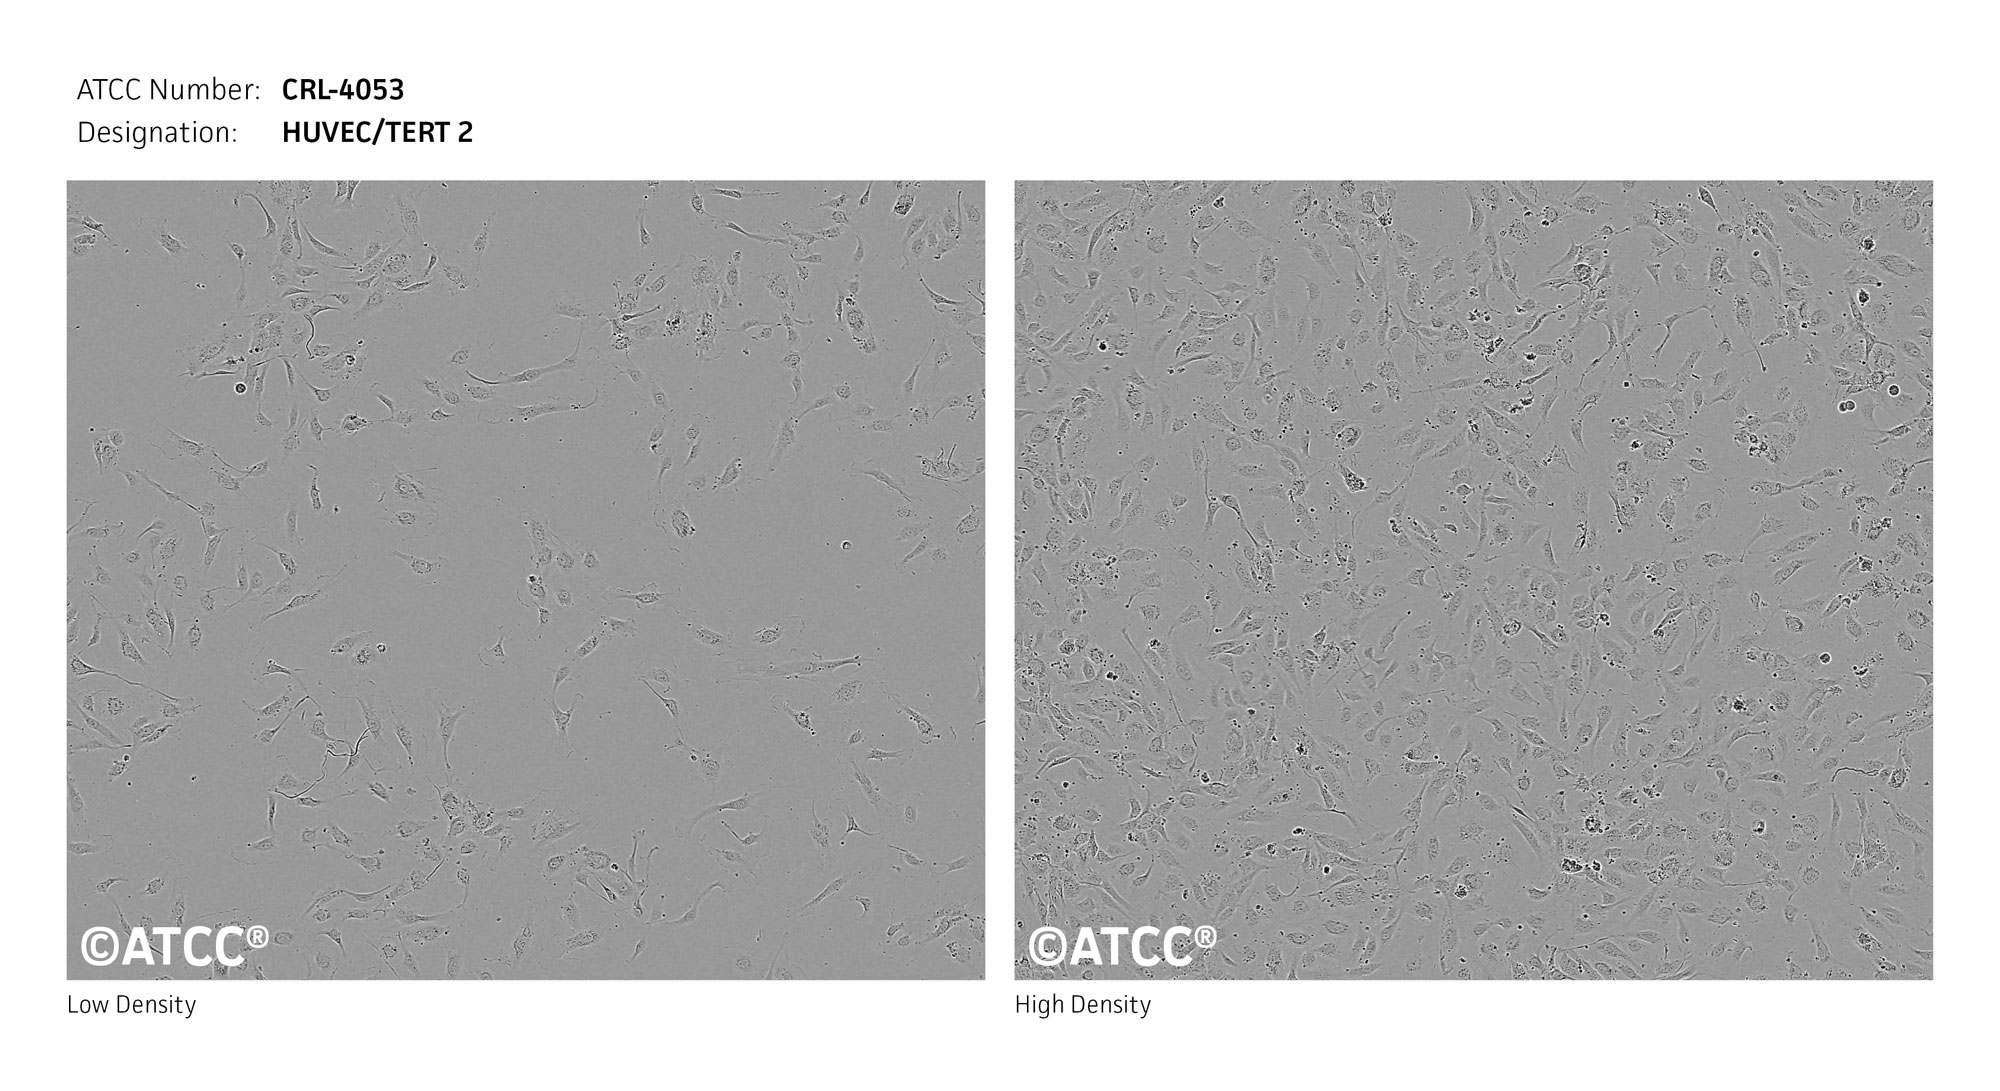 Cell Micrograph of HUVEC/TERT2 cells, CRL-4053